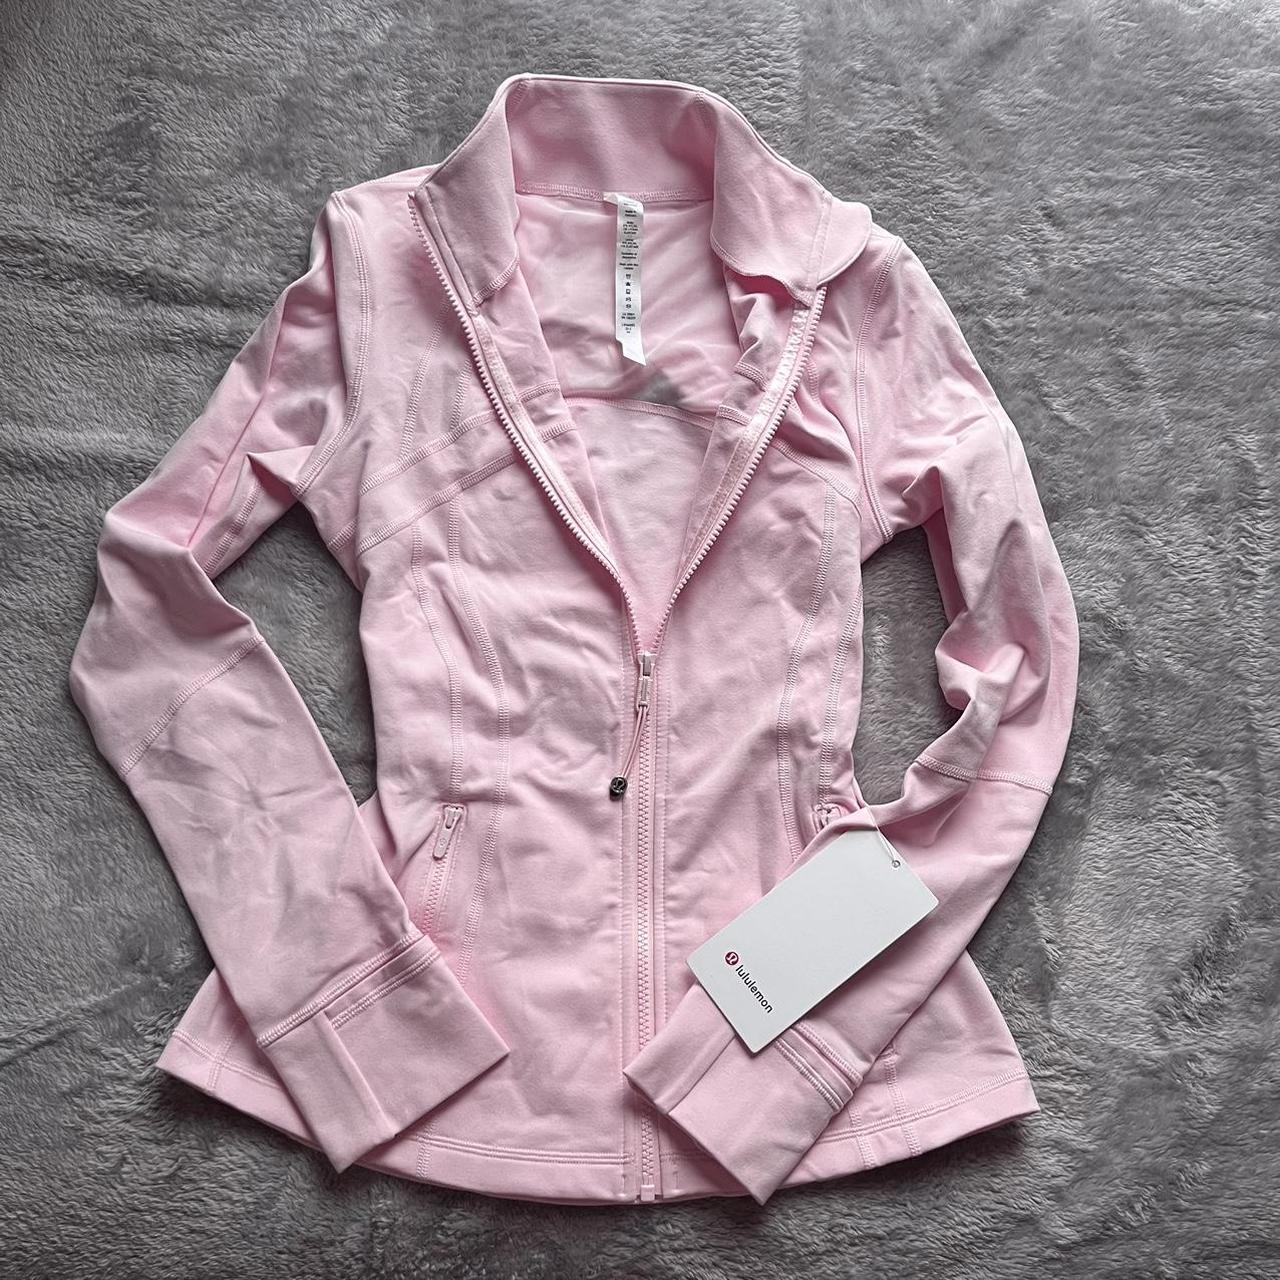 define jacket from lululemon pink｜TikTok Search